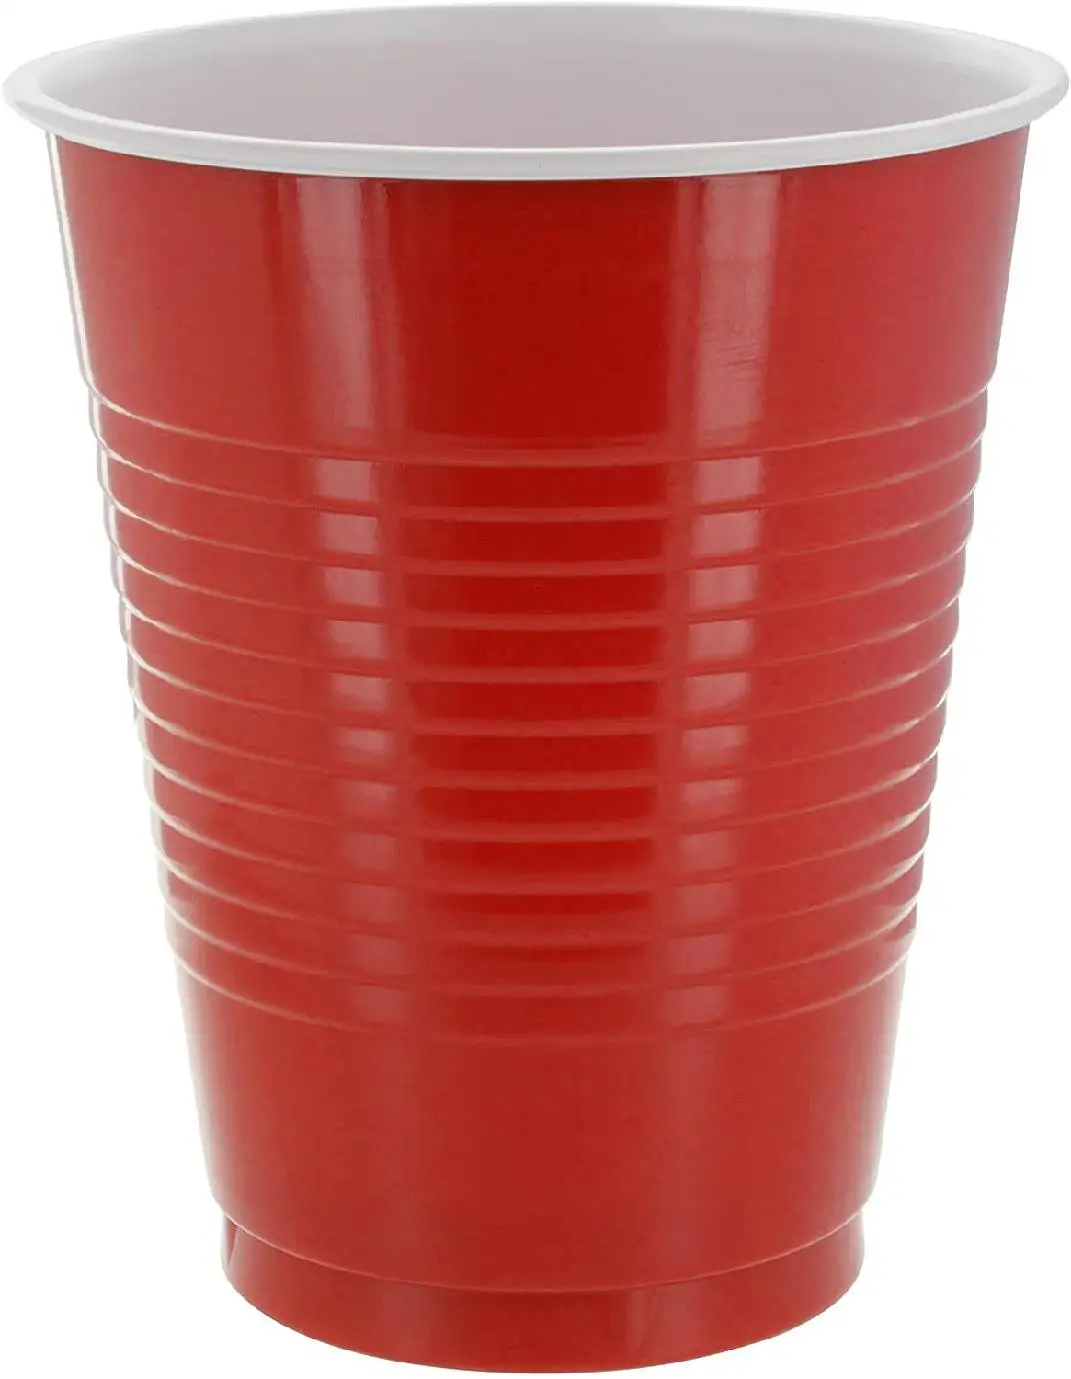 16Oz PS Gelas Bir Plastik Sekali Pakai Cangkir Merah Layanan Profesional Perayaan Minuman Oem Ukuran Kustom Diterima Vasos De Plastica